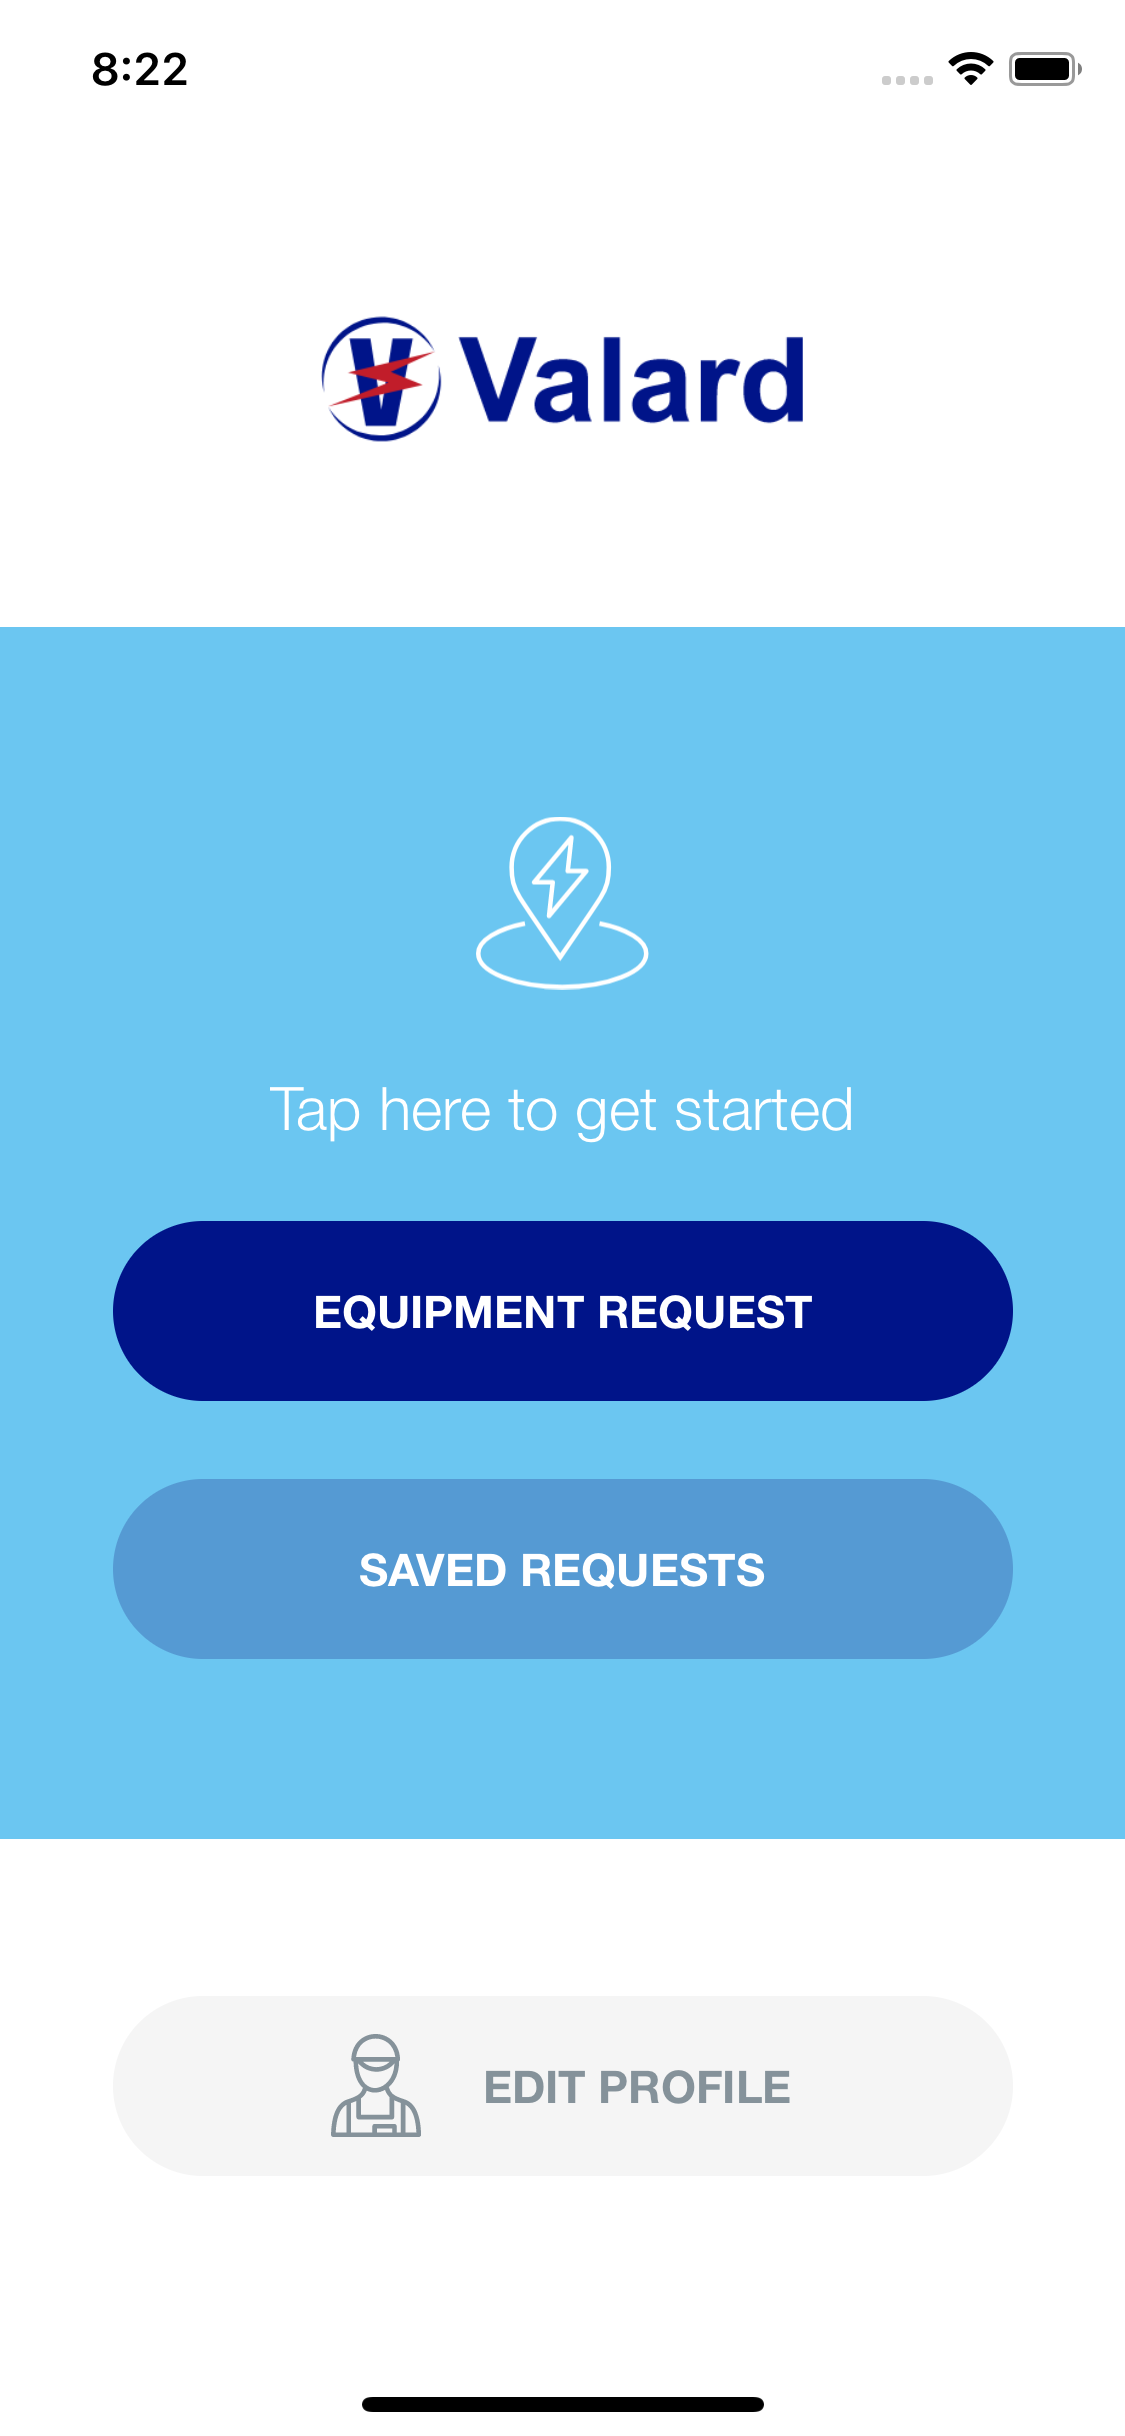 Valard Equipment Request Mobile App Login Screen